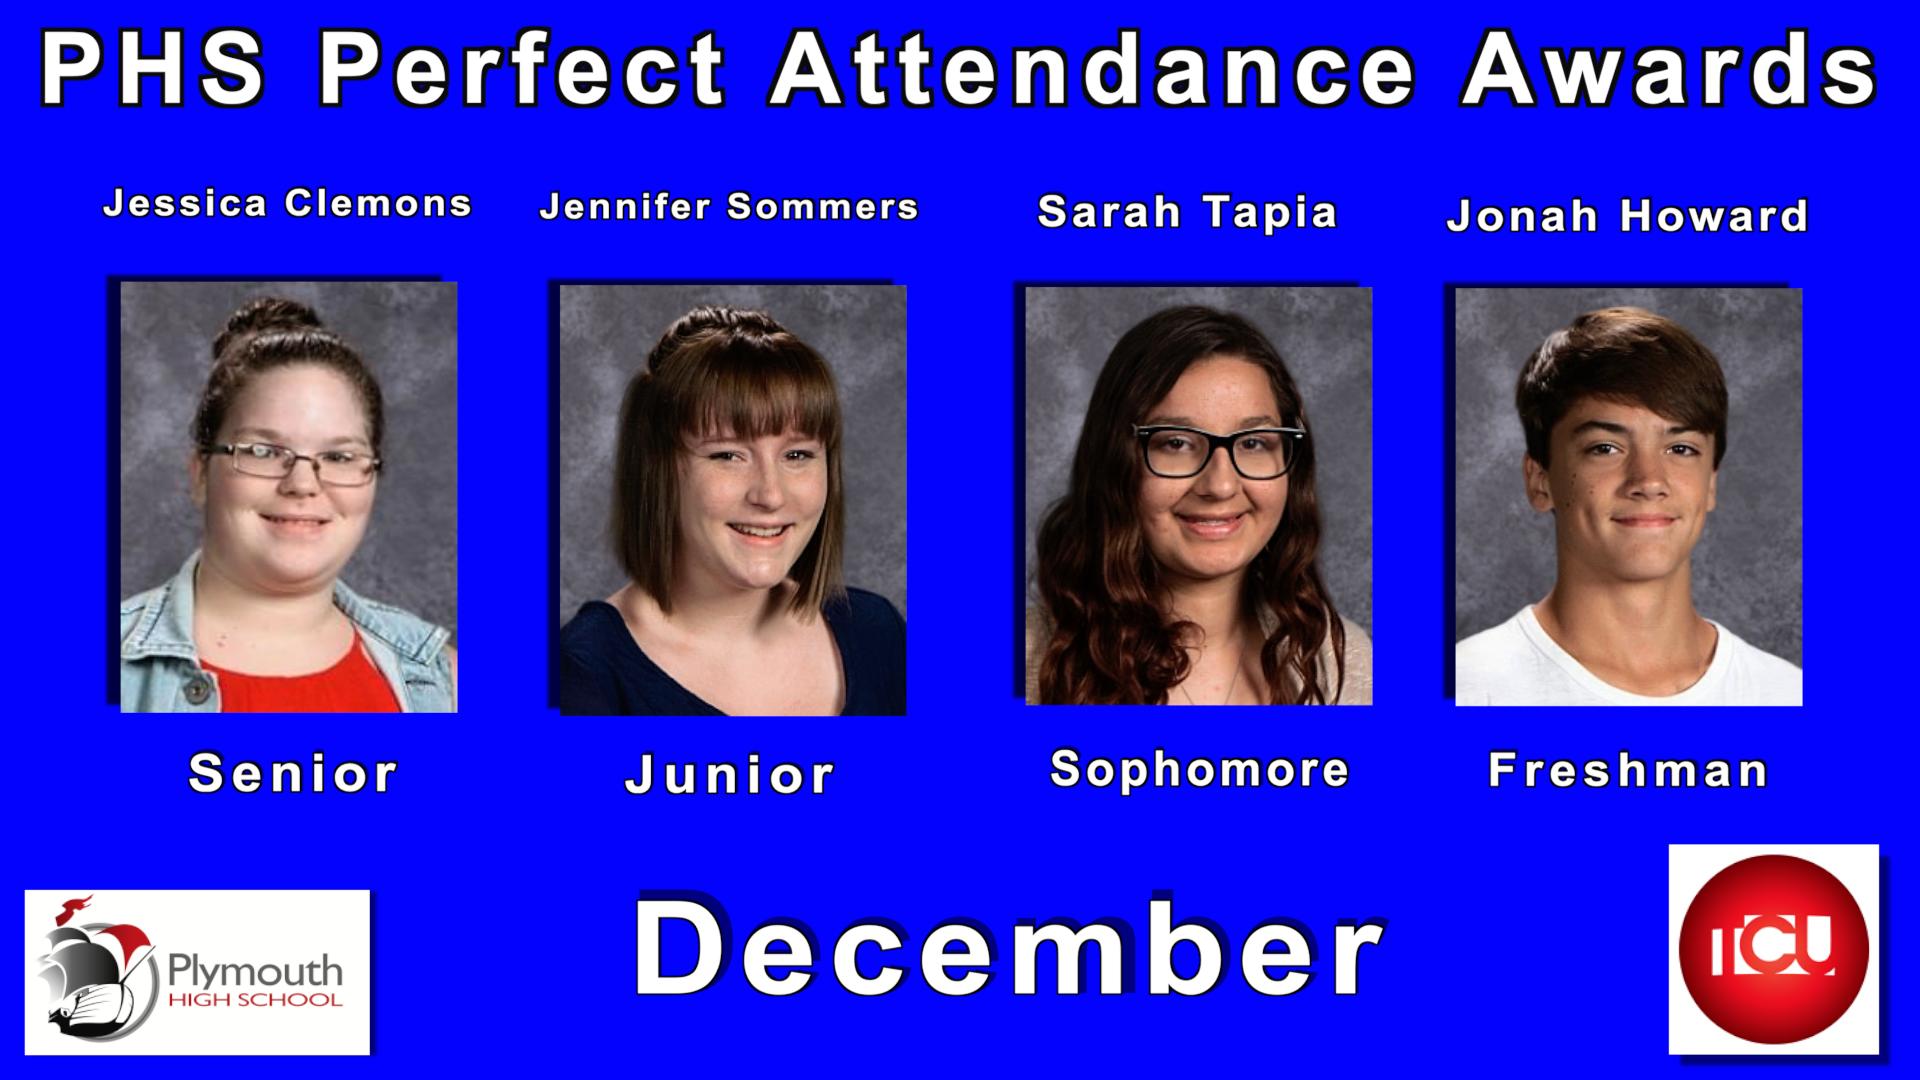 PHS Perfect Attendance Awards Jessica Clemons Senior, Jennifer Sommers Junior, Sarah Tapia Sophomore, Jonah Howard Freshman December. Plymouth High School and TCU logos